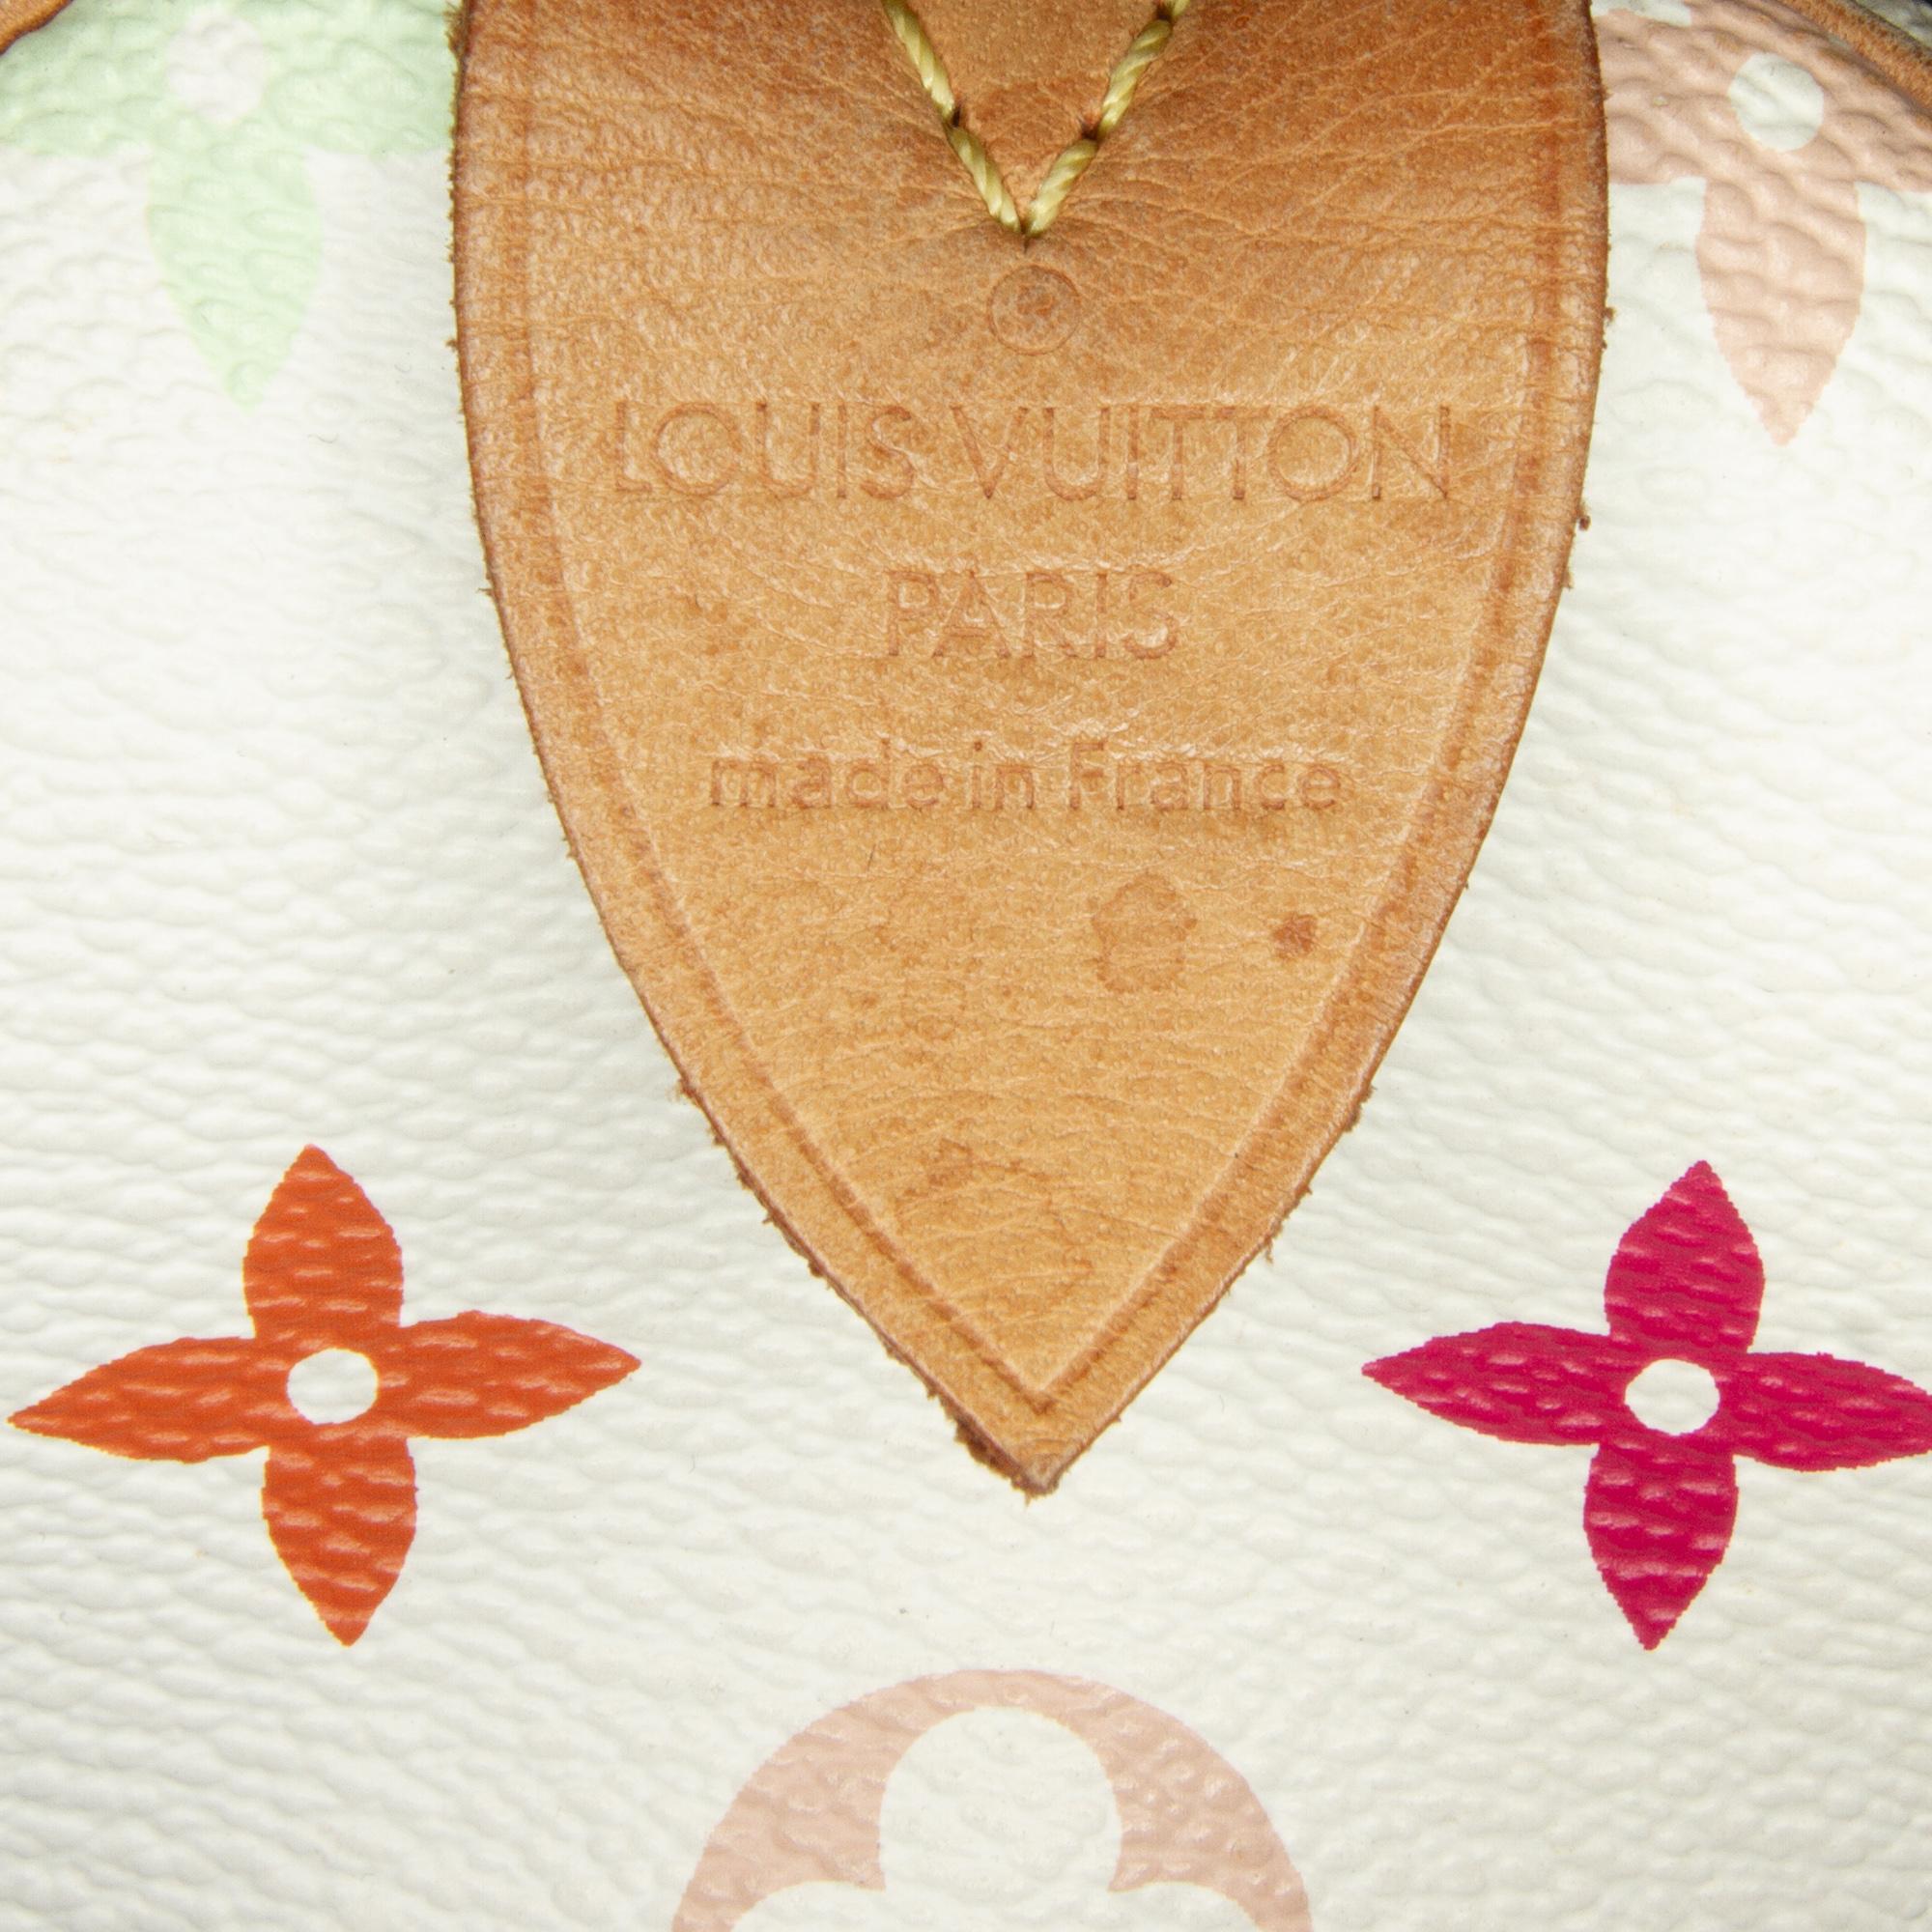 Louis Vuitton White Monogram Multicolore Speedy 30